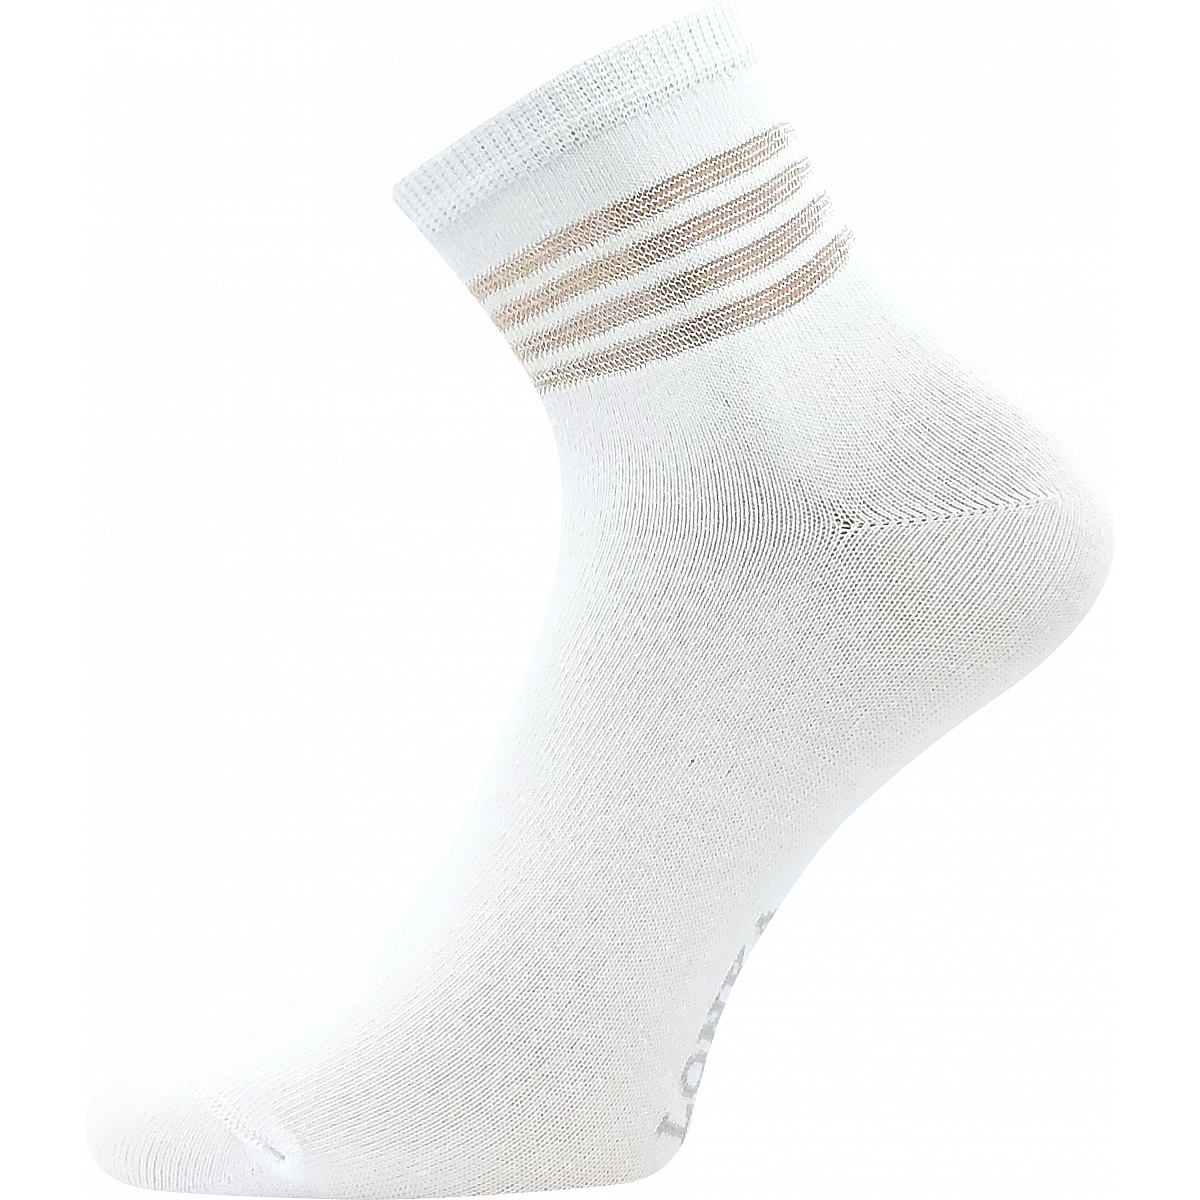 Ponožky dámské Lonka Fasketa - bílé, 39-42